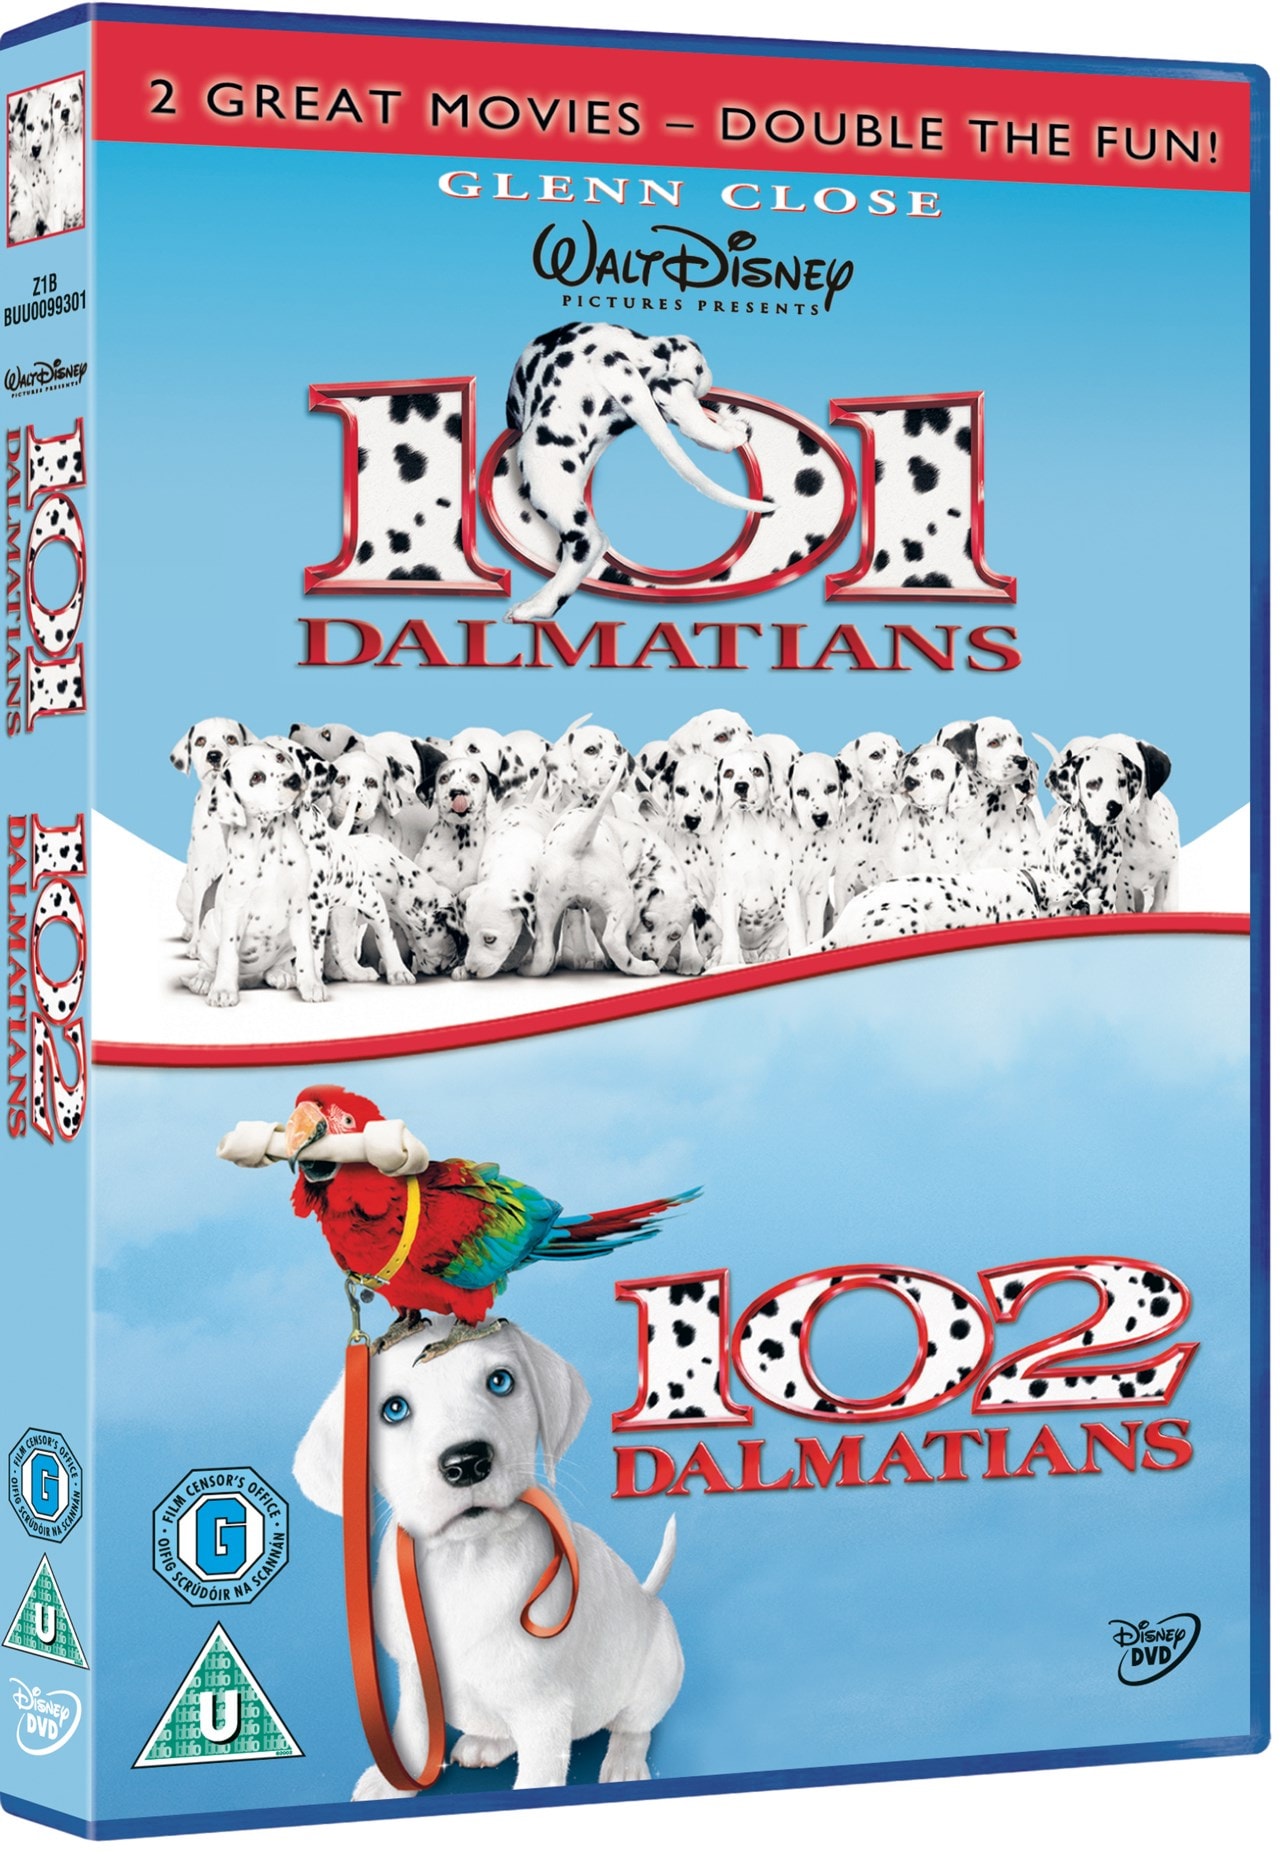 101 Dalmatians 102 Dalmatians Dvd Free Shipping Over 20